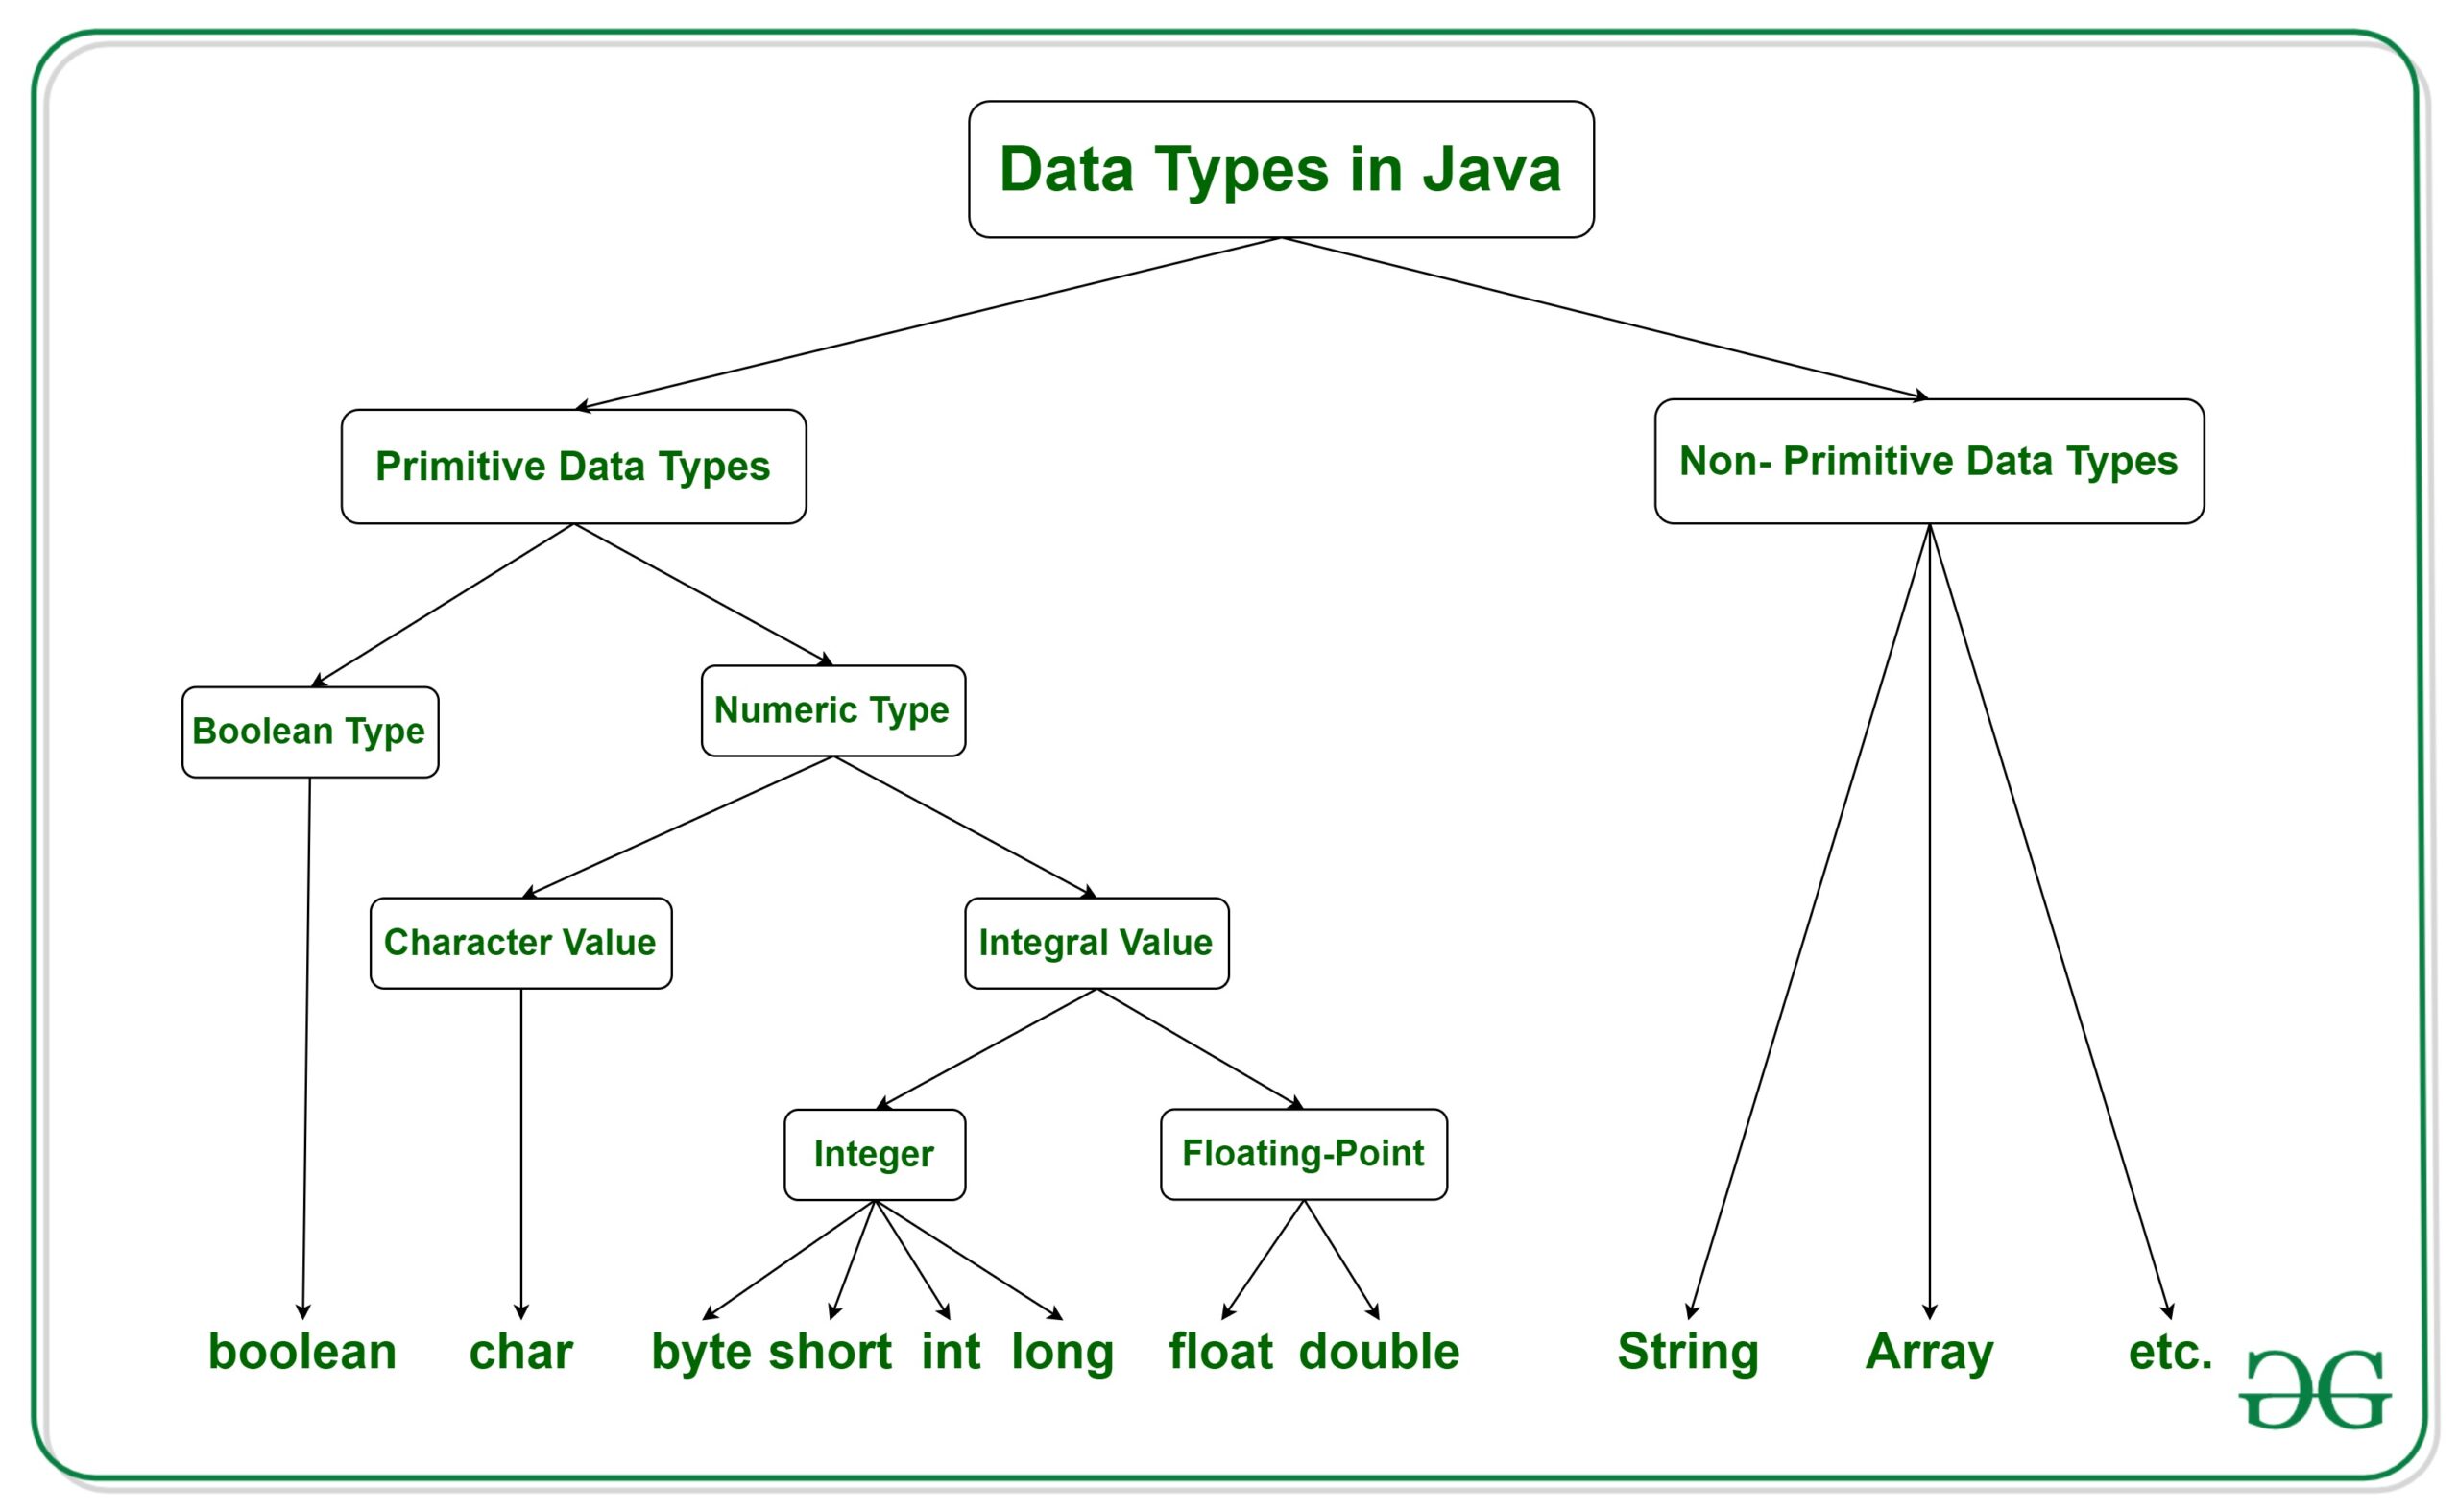 Primitive data type